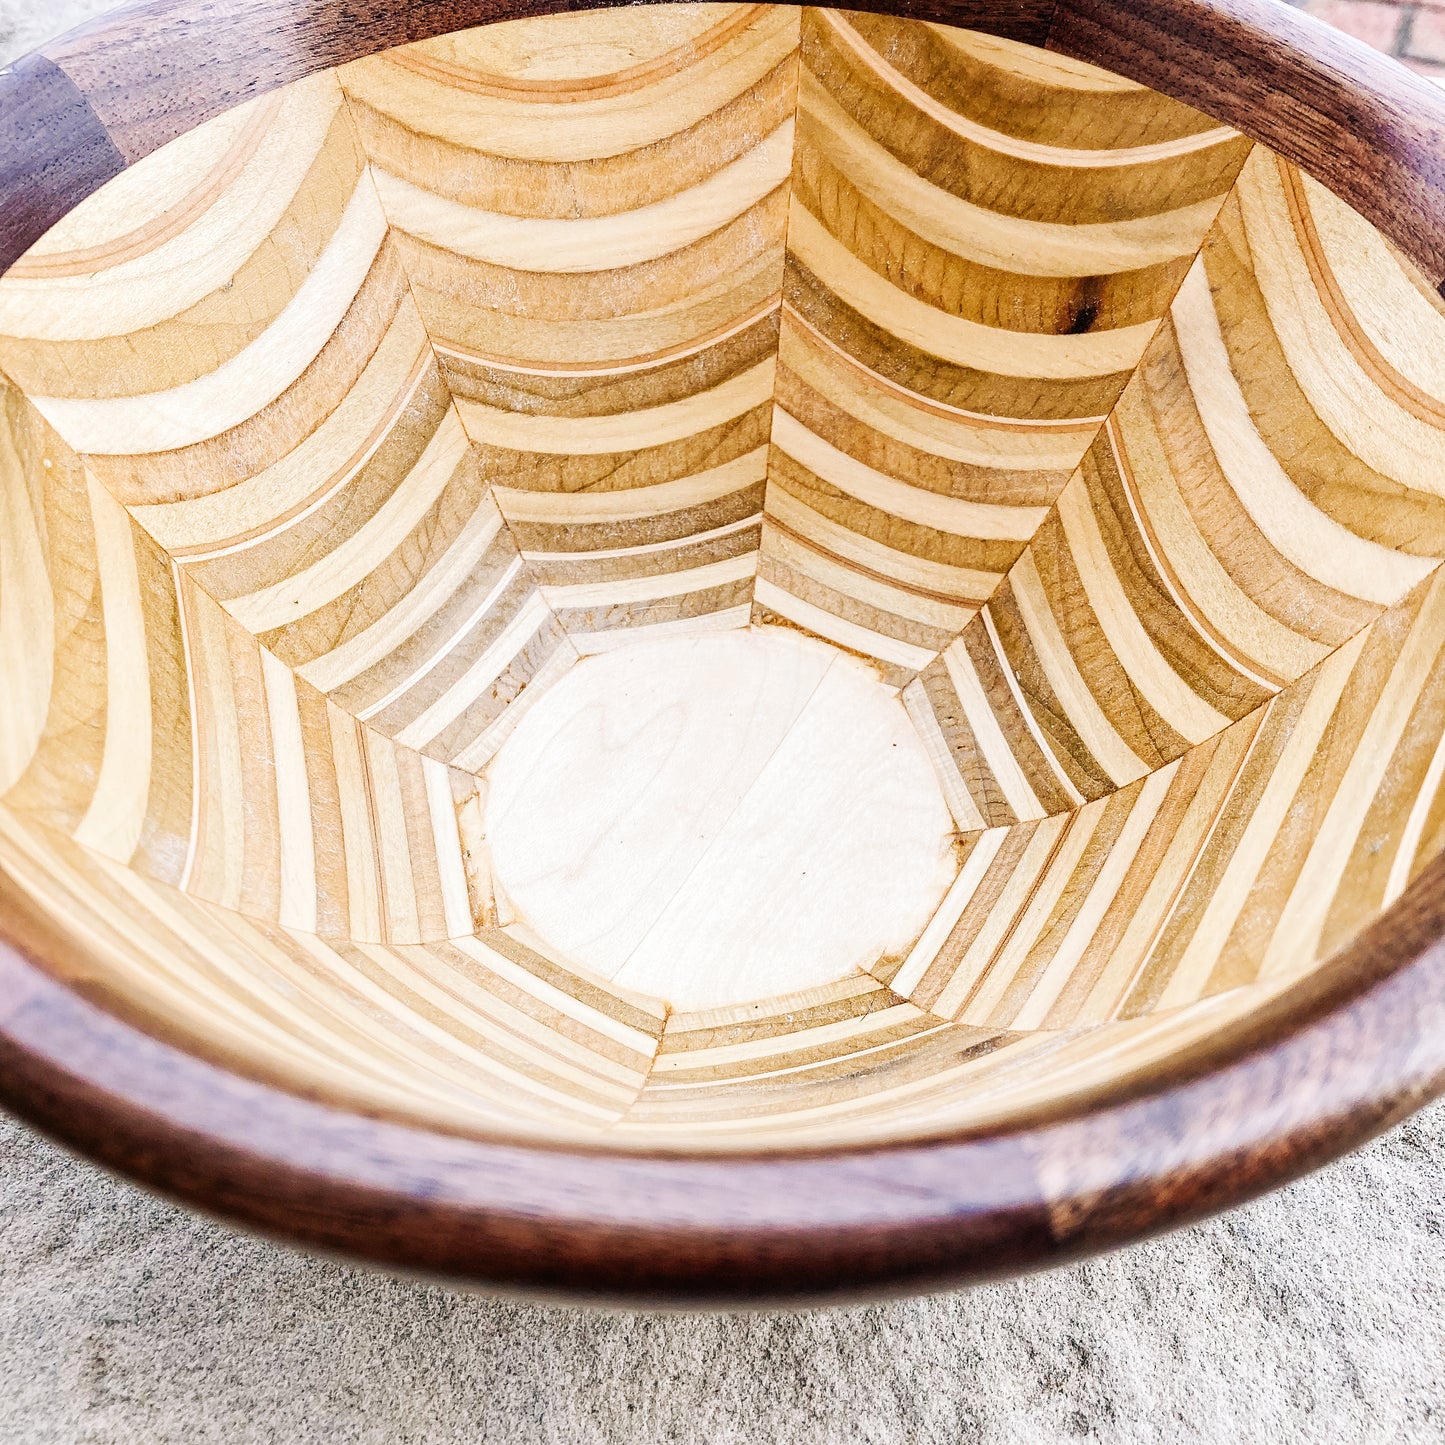 Medium-Sized Wooden Bowl